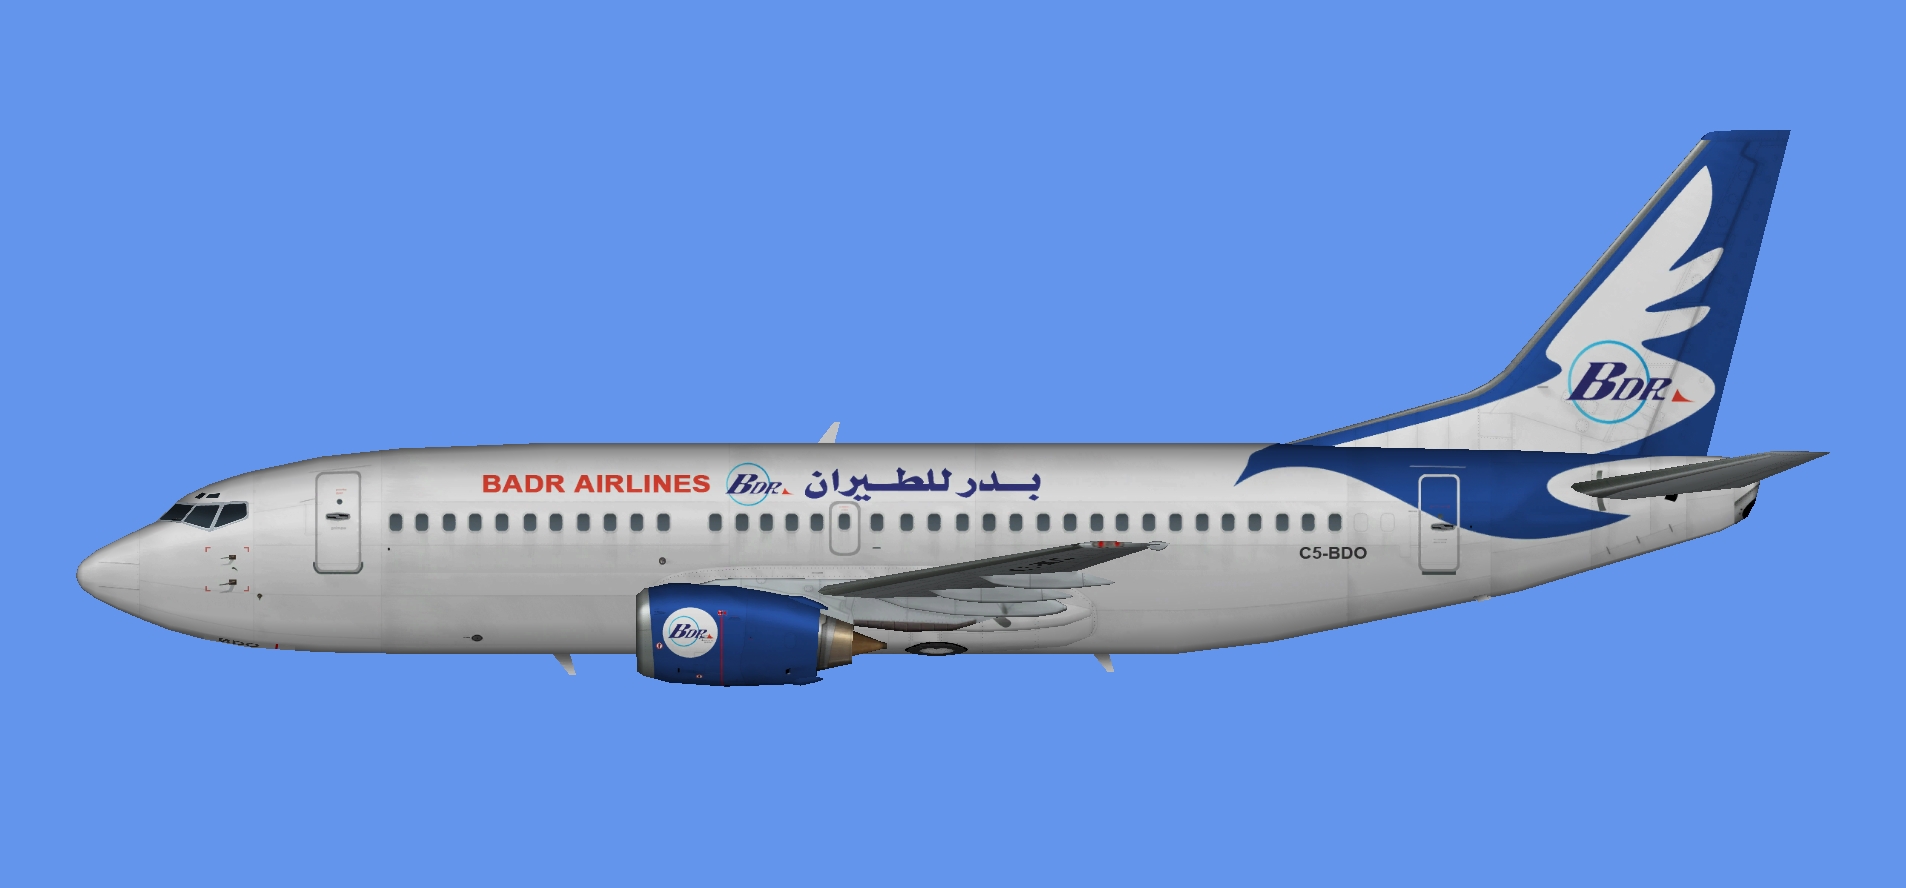 Badr Airlines Boeing 737-300